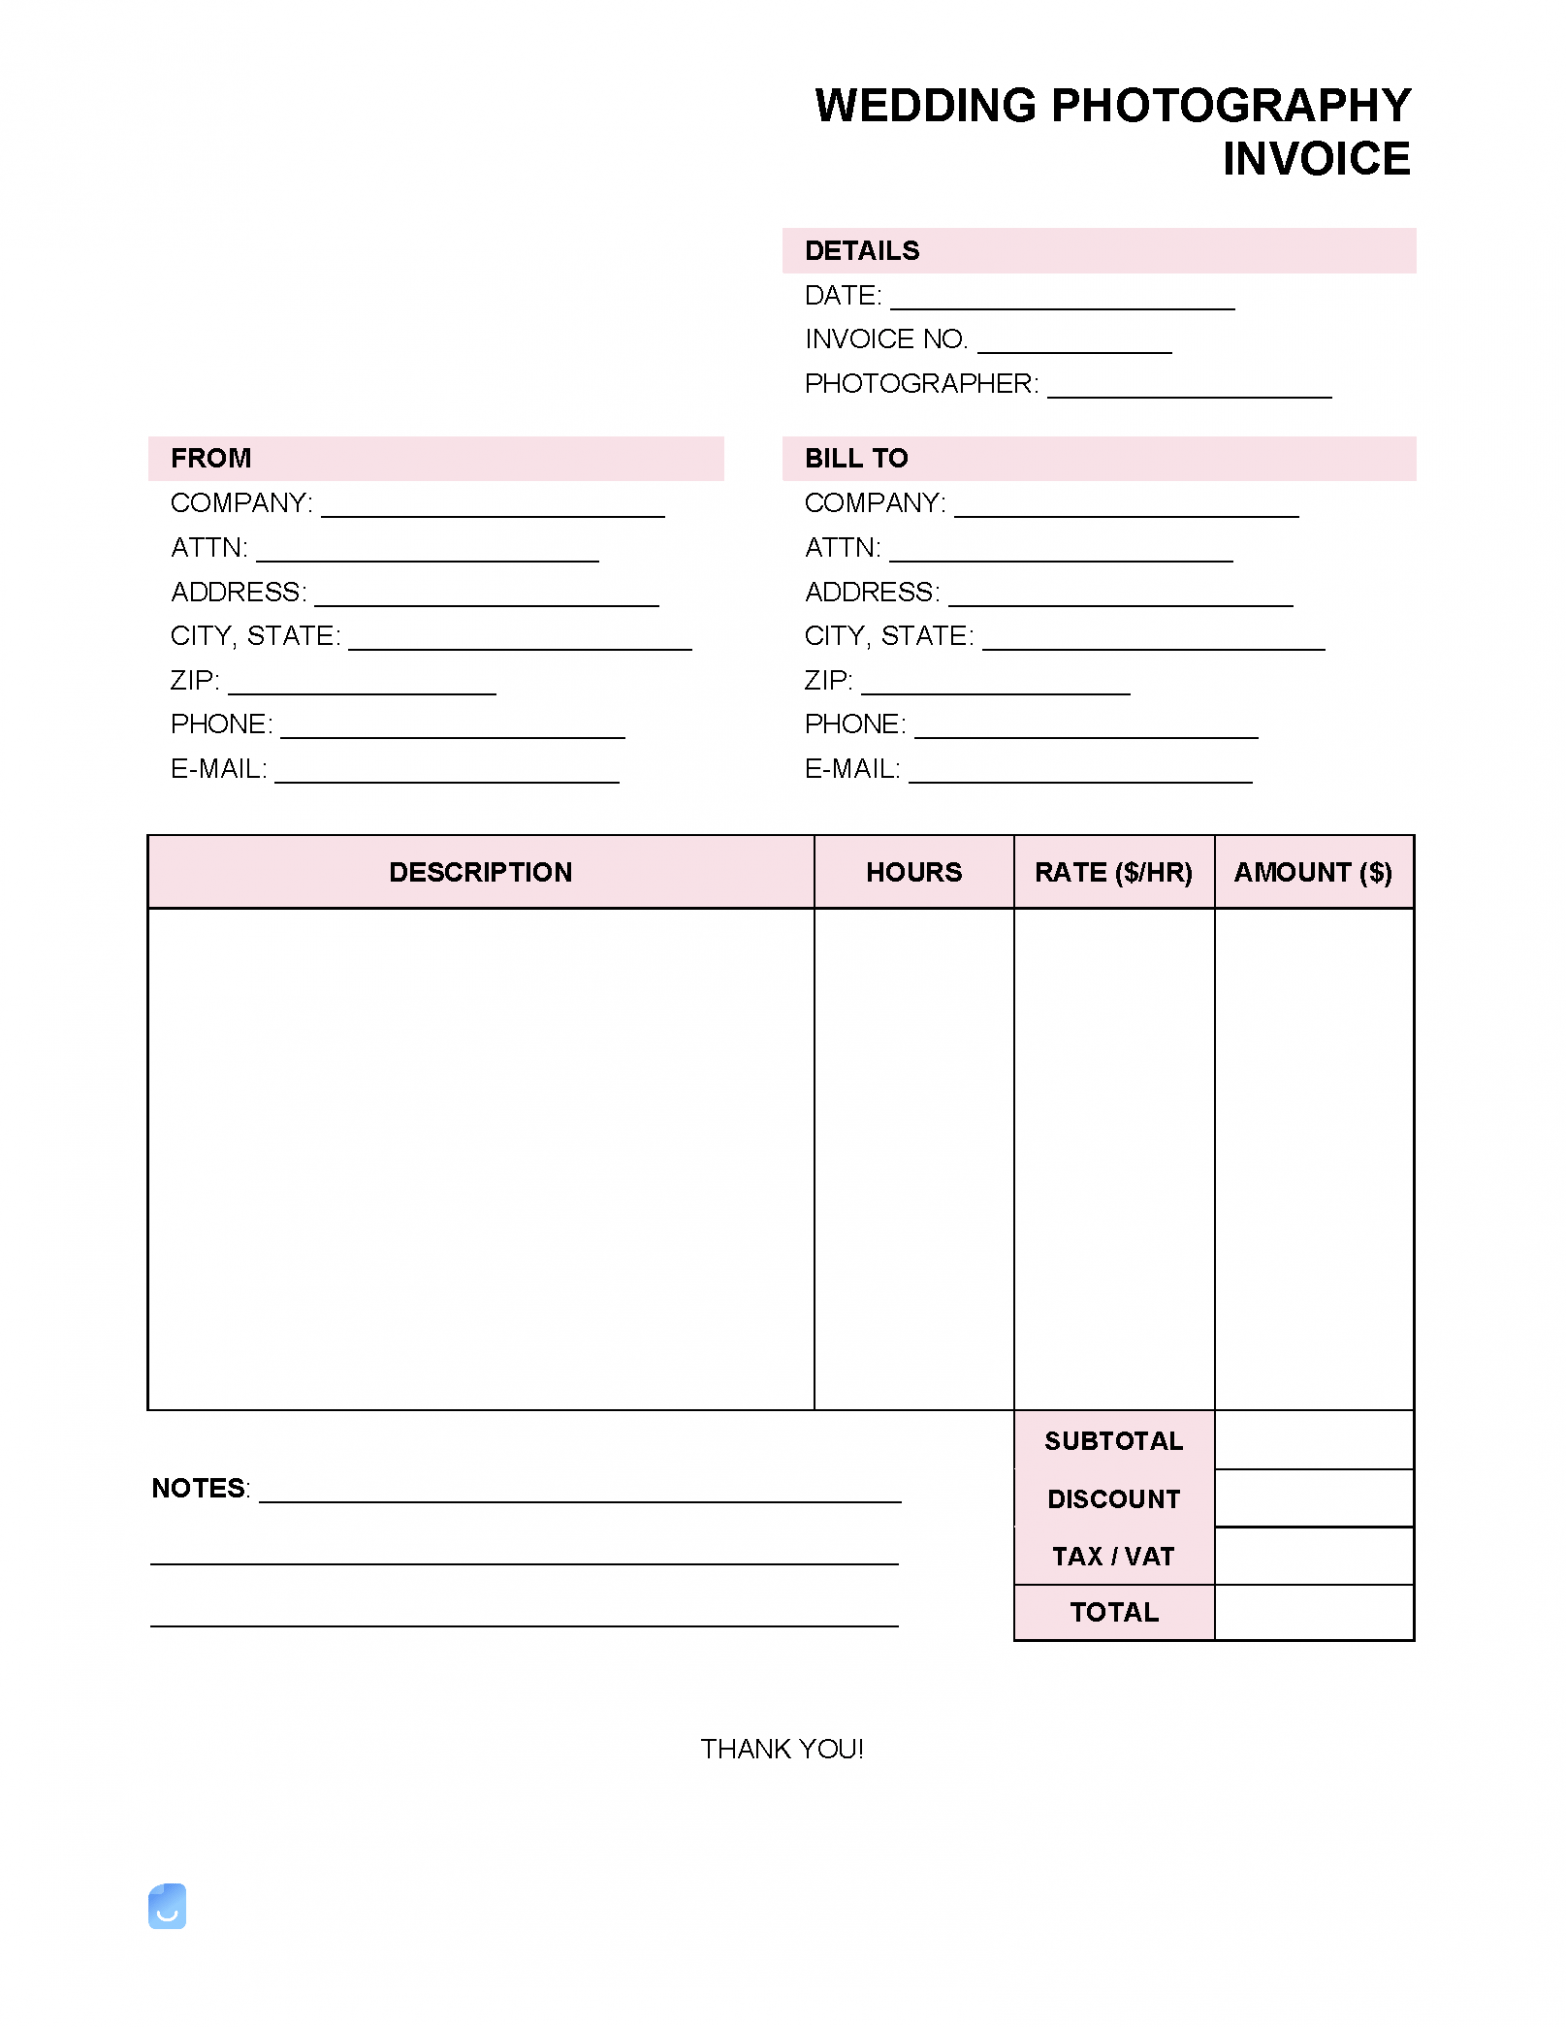 Editable Wedding Pography Invoice Template PDF